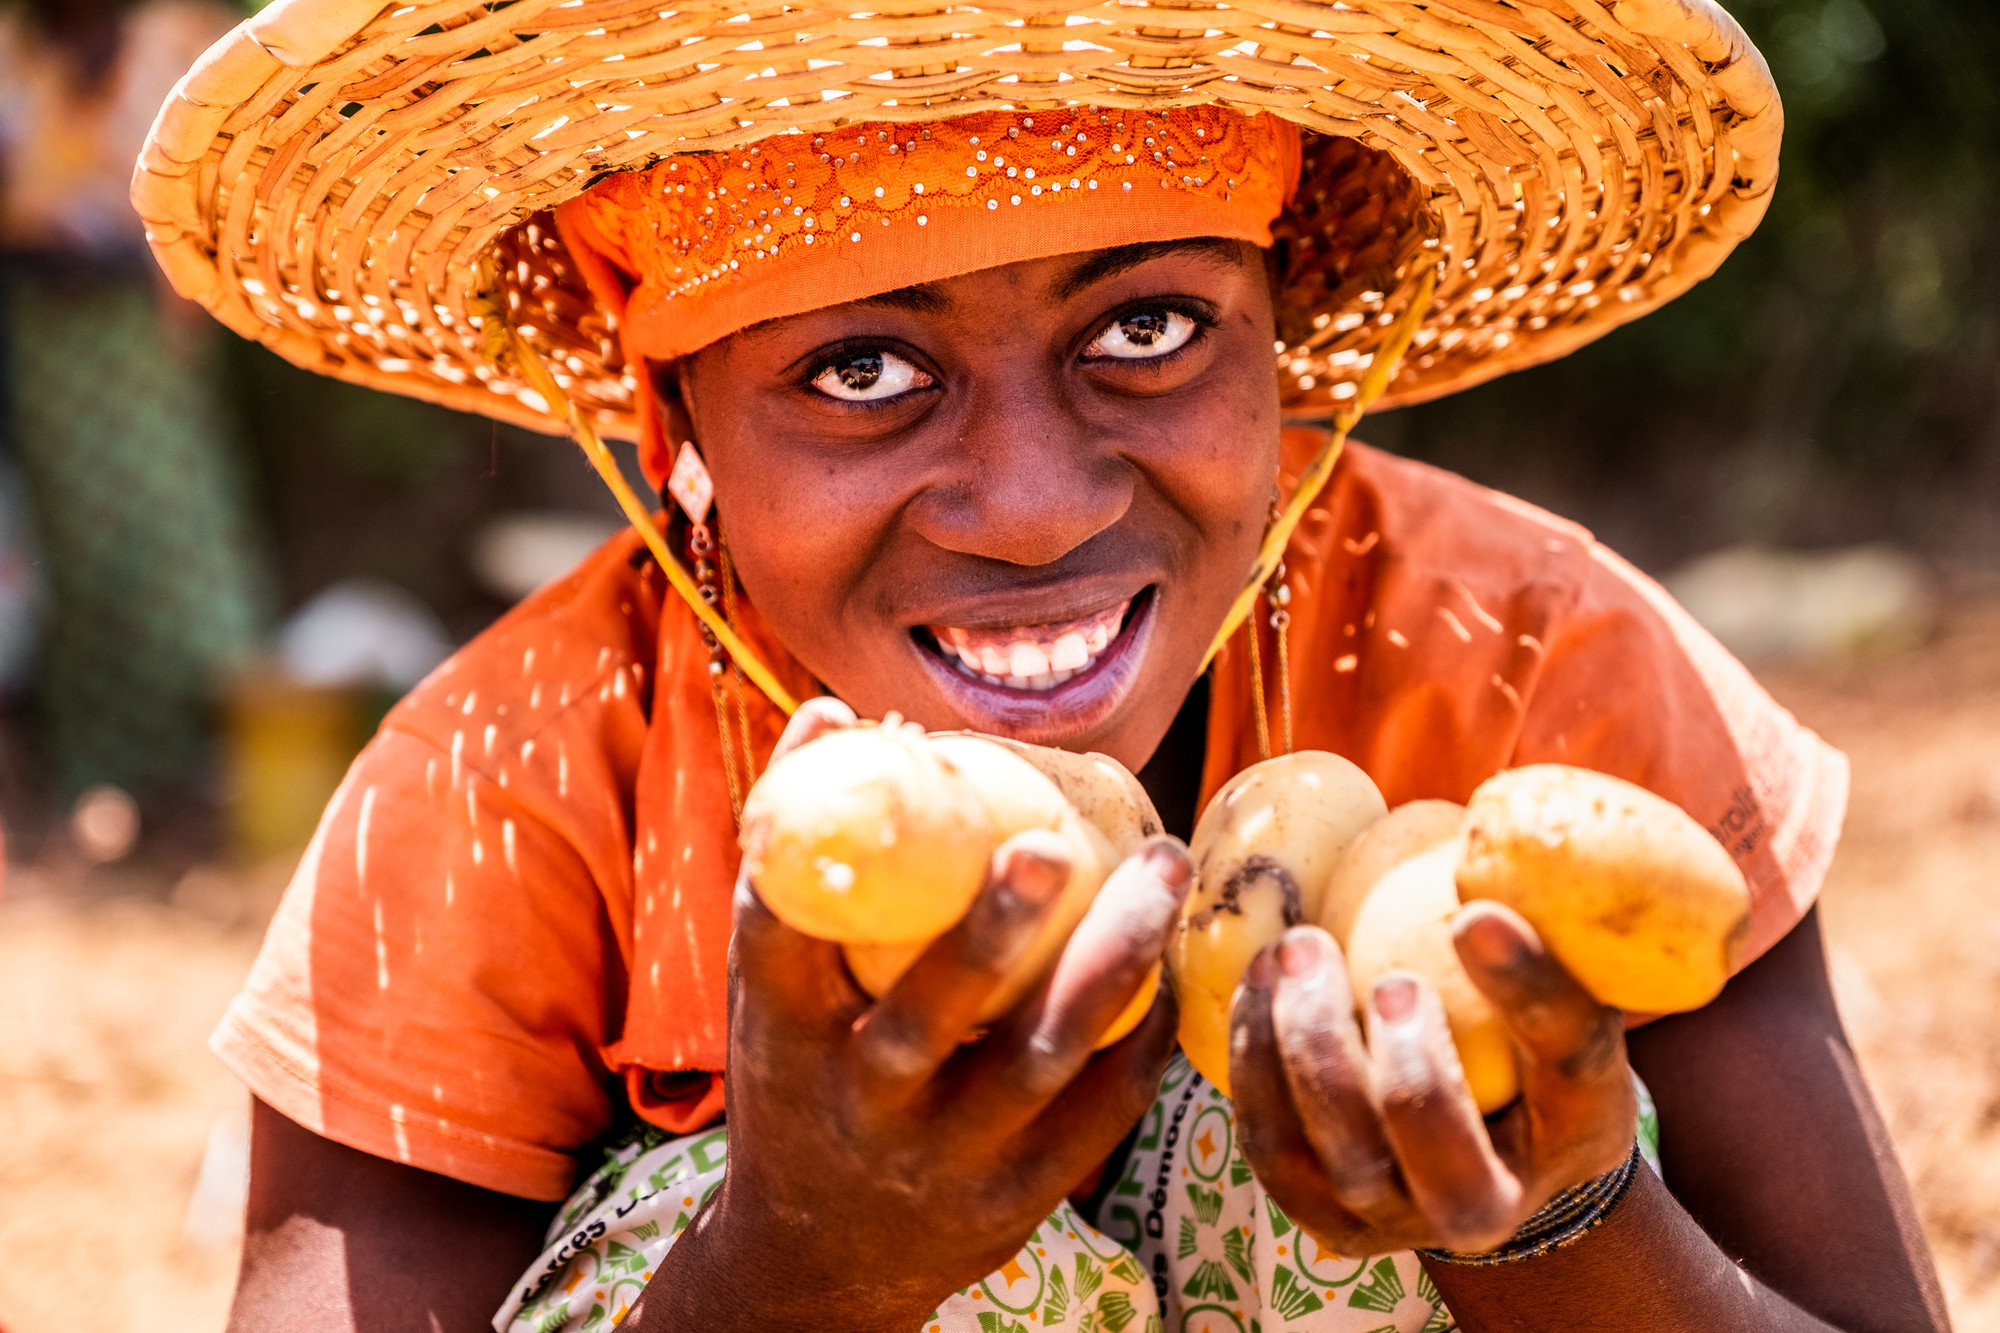 Young potato farmer from Guinea